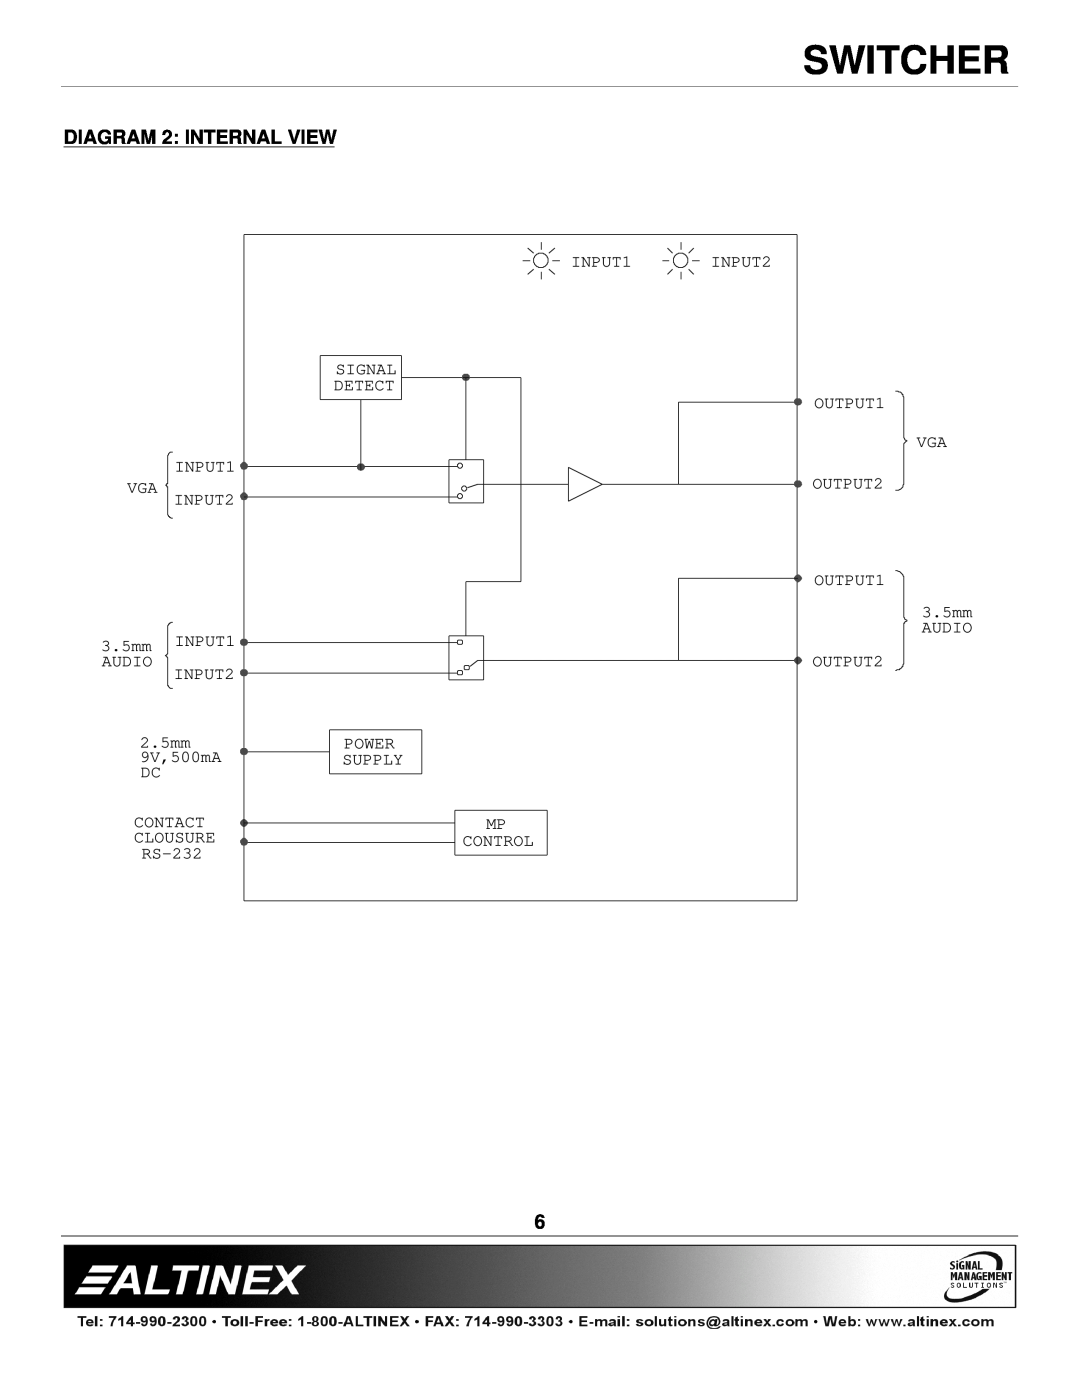 Altinex MX2106AV manual Switcher, DIAGRAM 2 INTERNAL VIEW, Detect, 3.5mm, Audio 